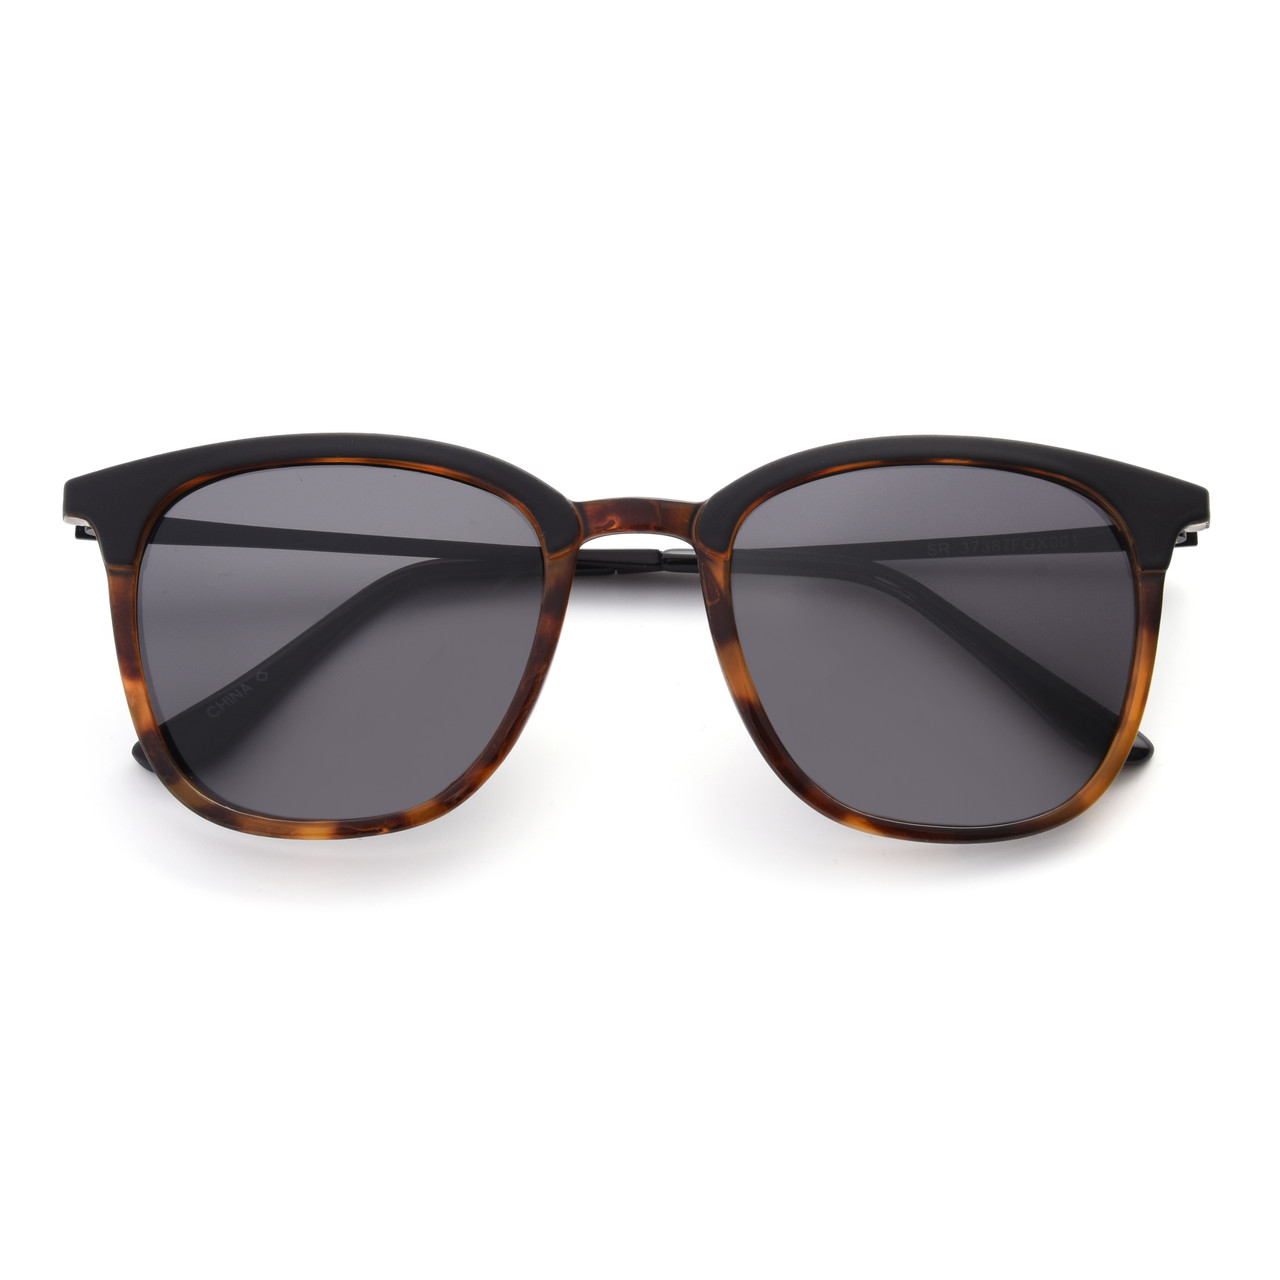 Marli Polarized for Digital Sunglasses